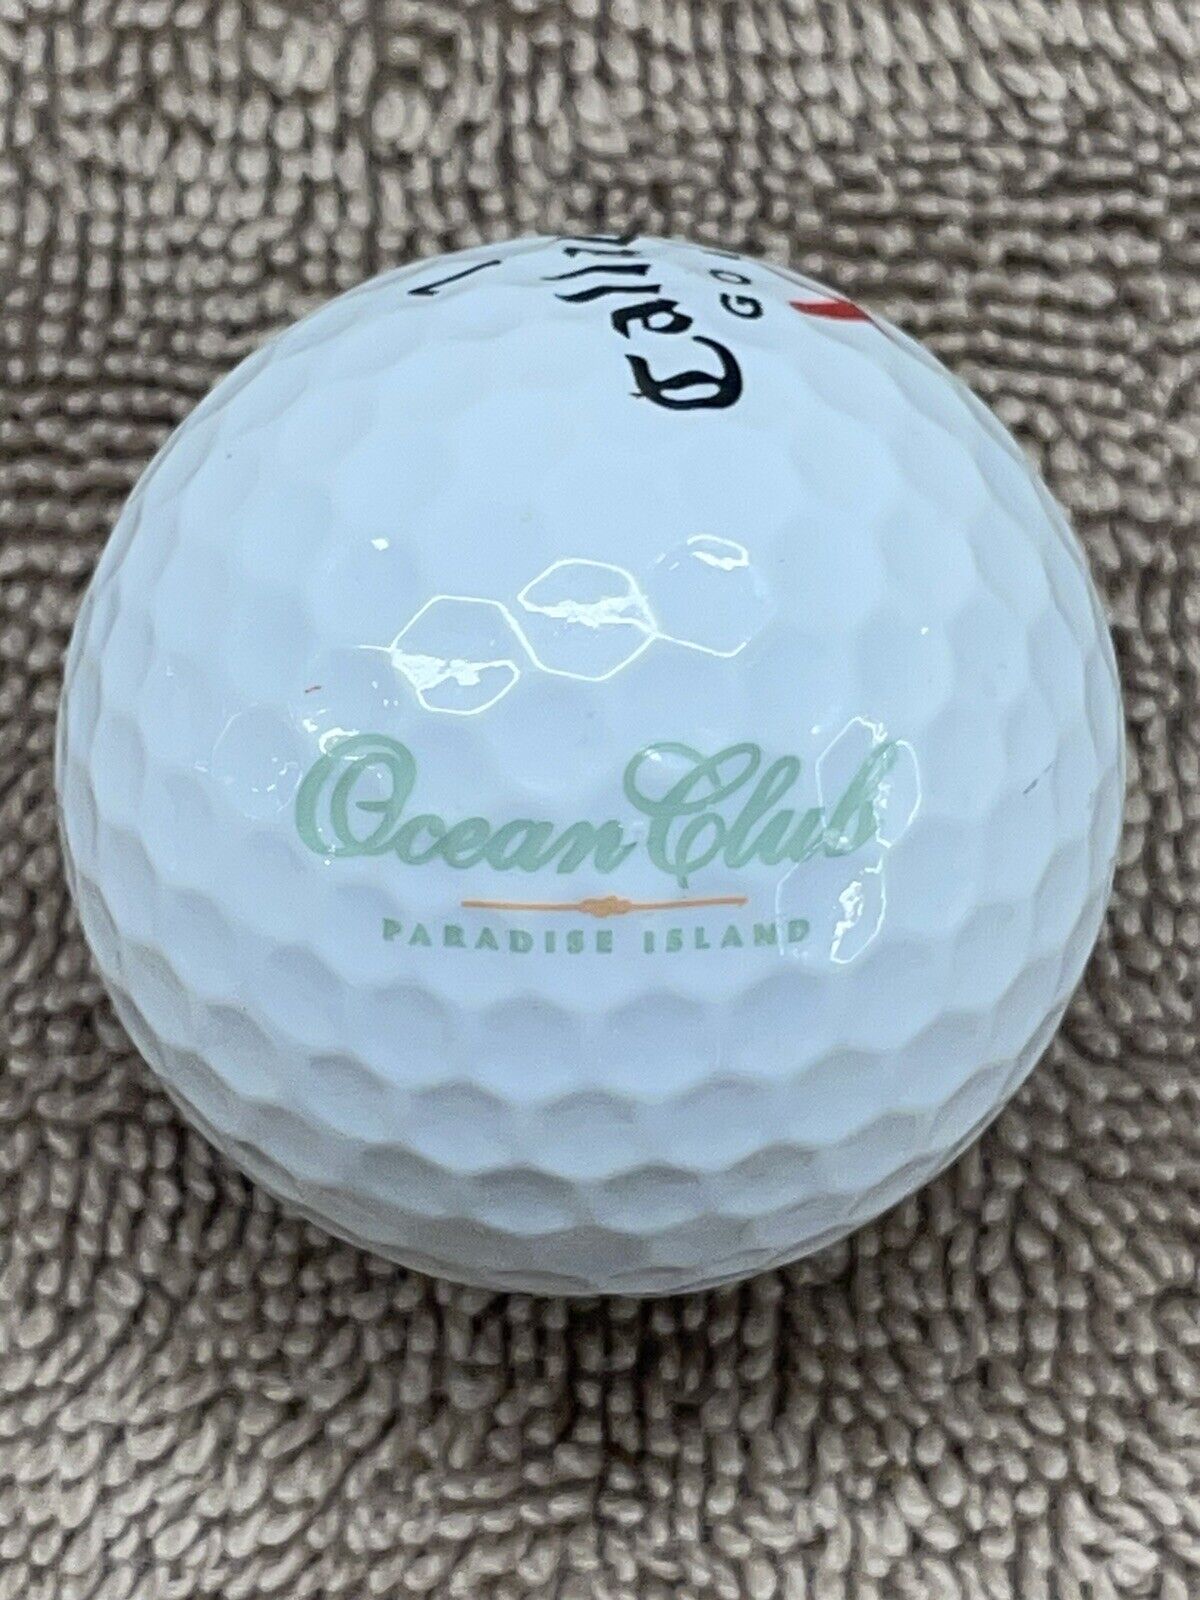 Ocean Club At Paradise Island (Bahamas) Logo Golf Ball (INV#7)